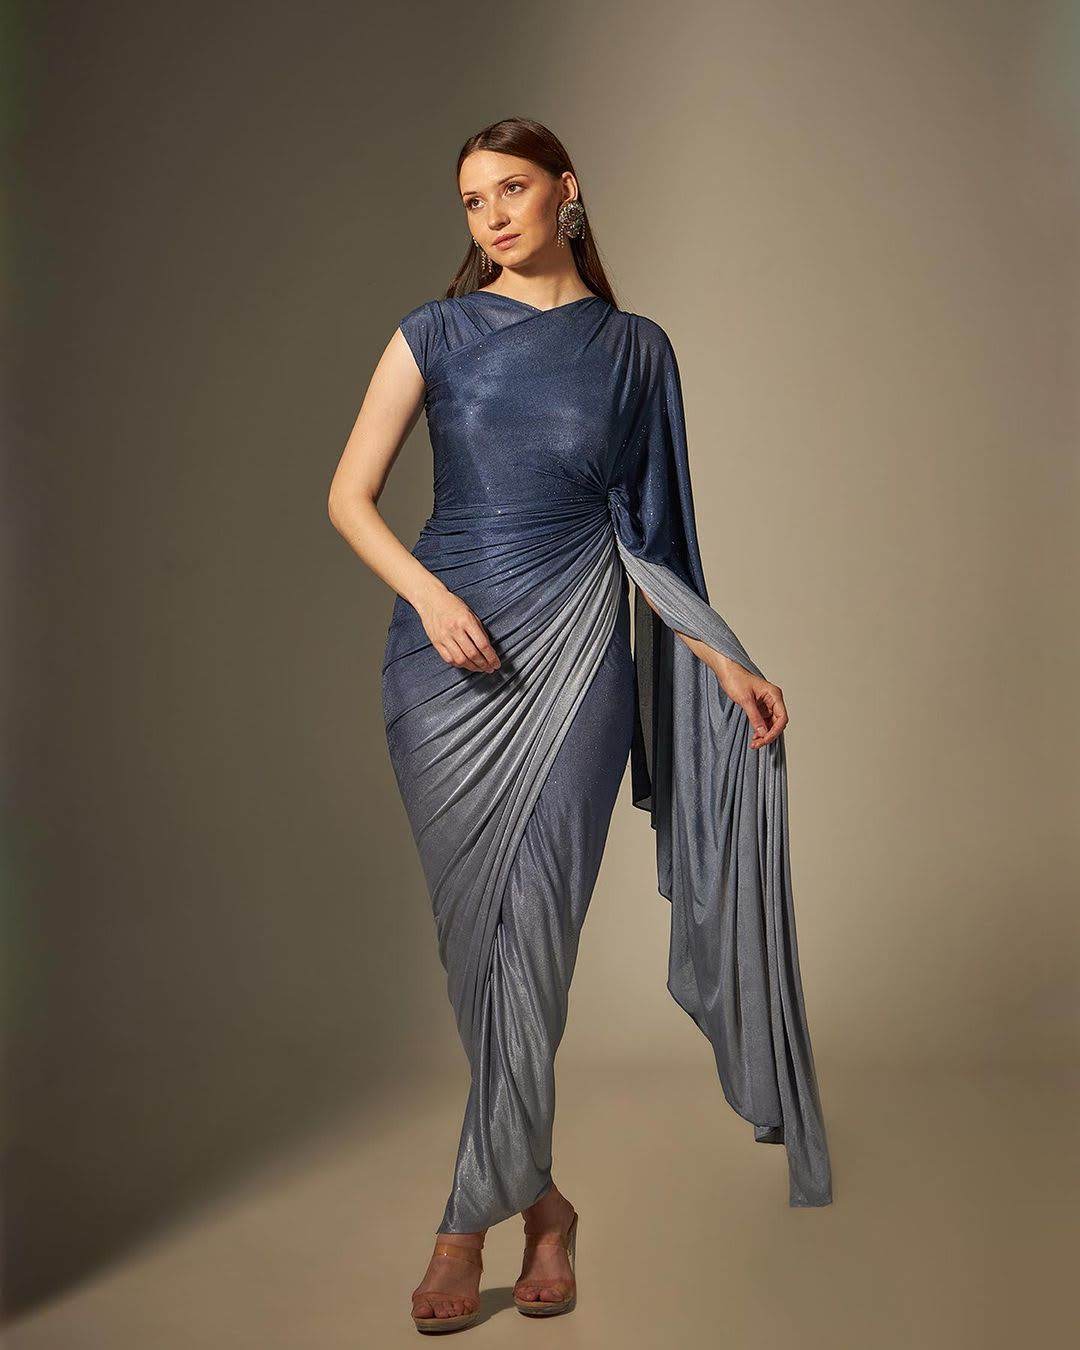 saree gown designs